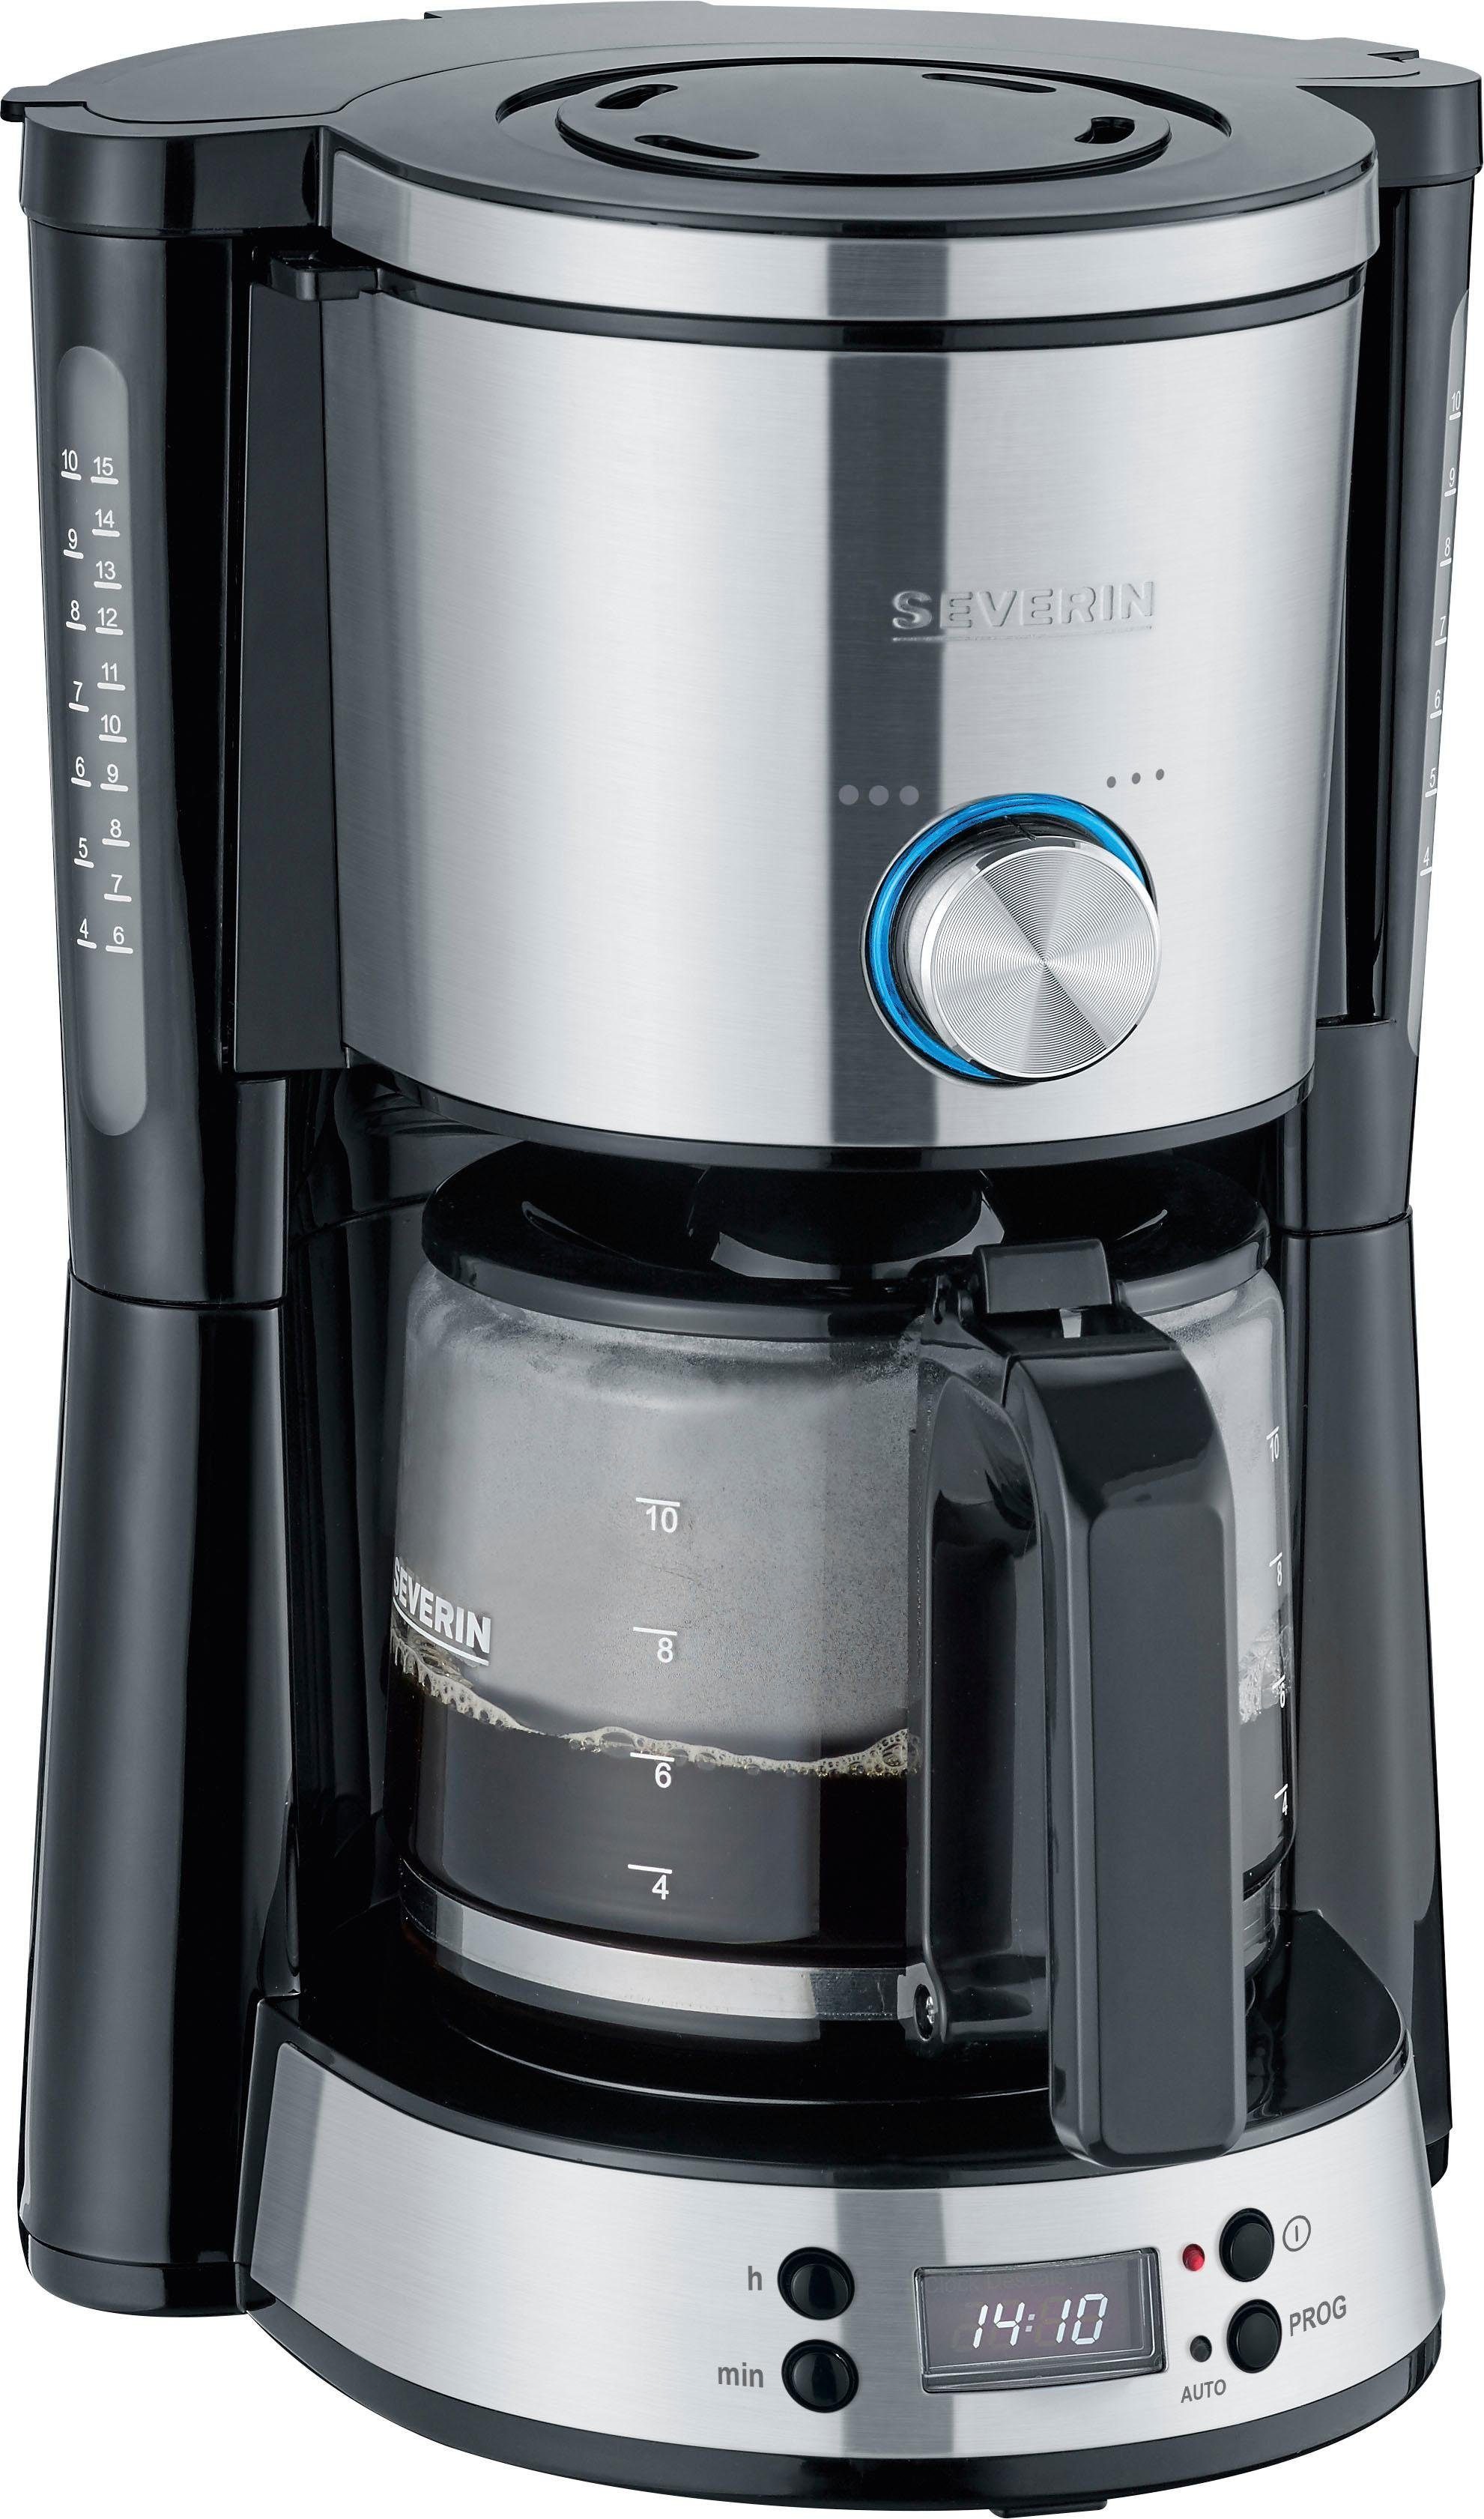 Severin Filterkaffeemaschine KA 4826, 1,25l Kaffeekanne, 1x4, Hochwertiges  Design mit Edelstahl-Applikationen | Filterkaffeemaschinen